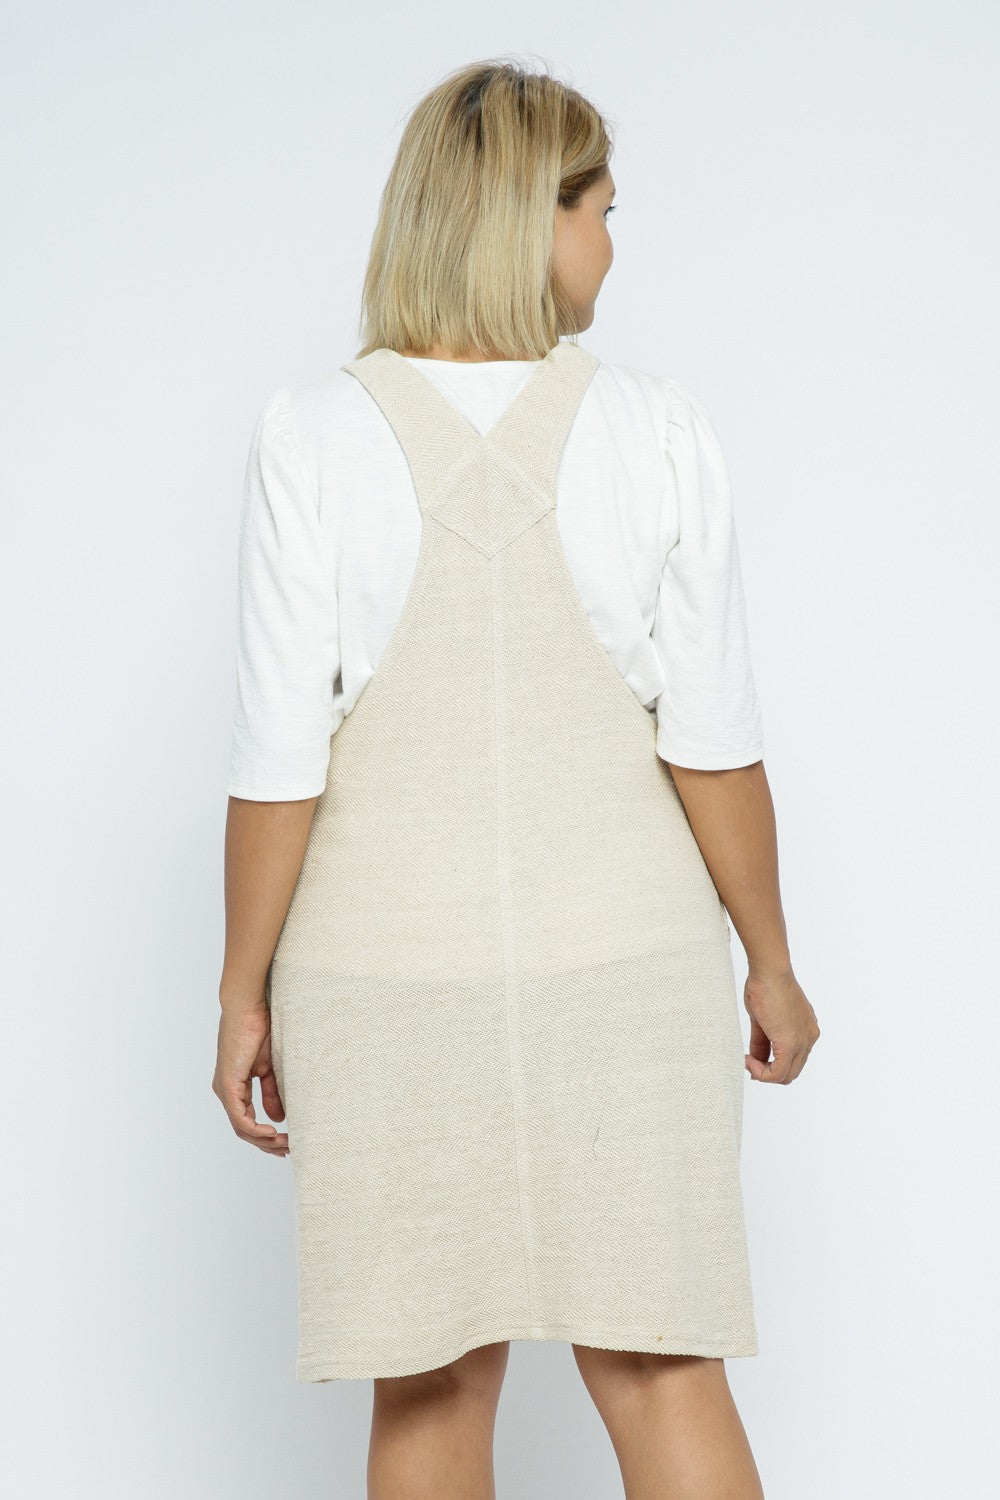 Textured Knit Overall Skirt